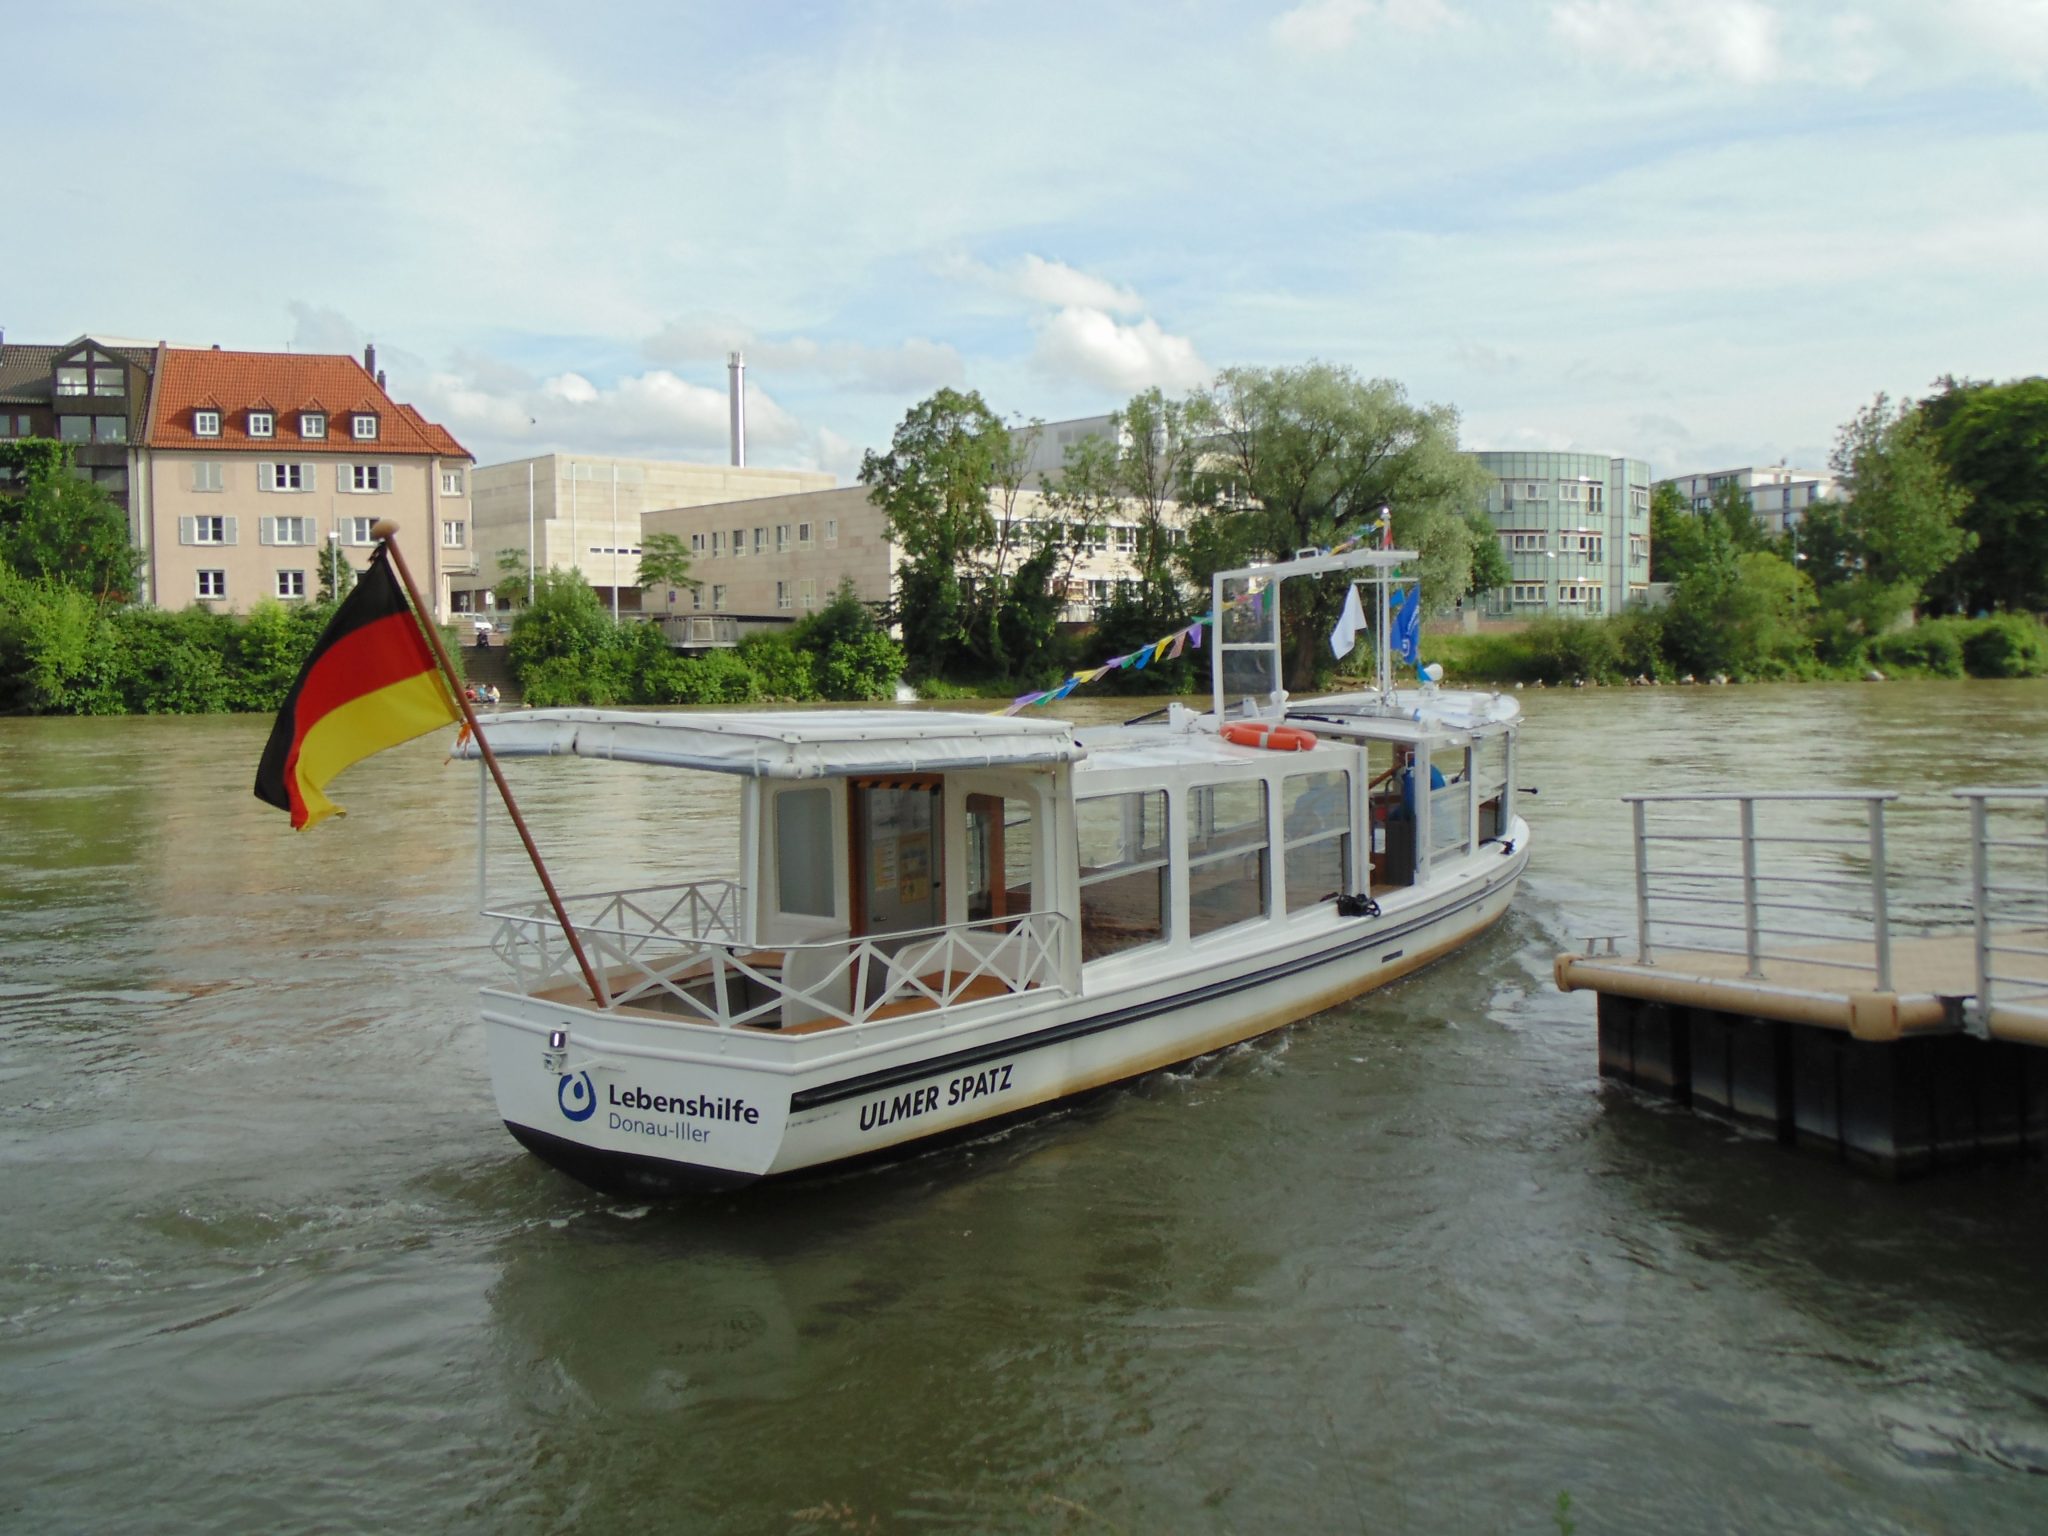 Donau-Schiff "Ulmer Spatz"